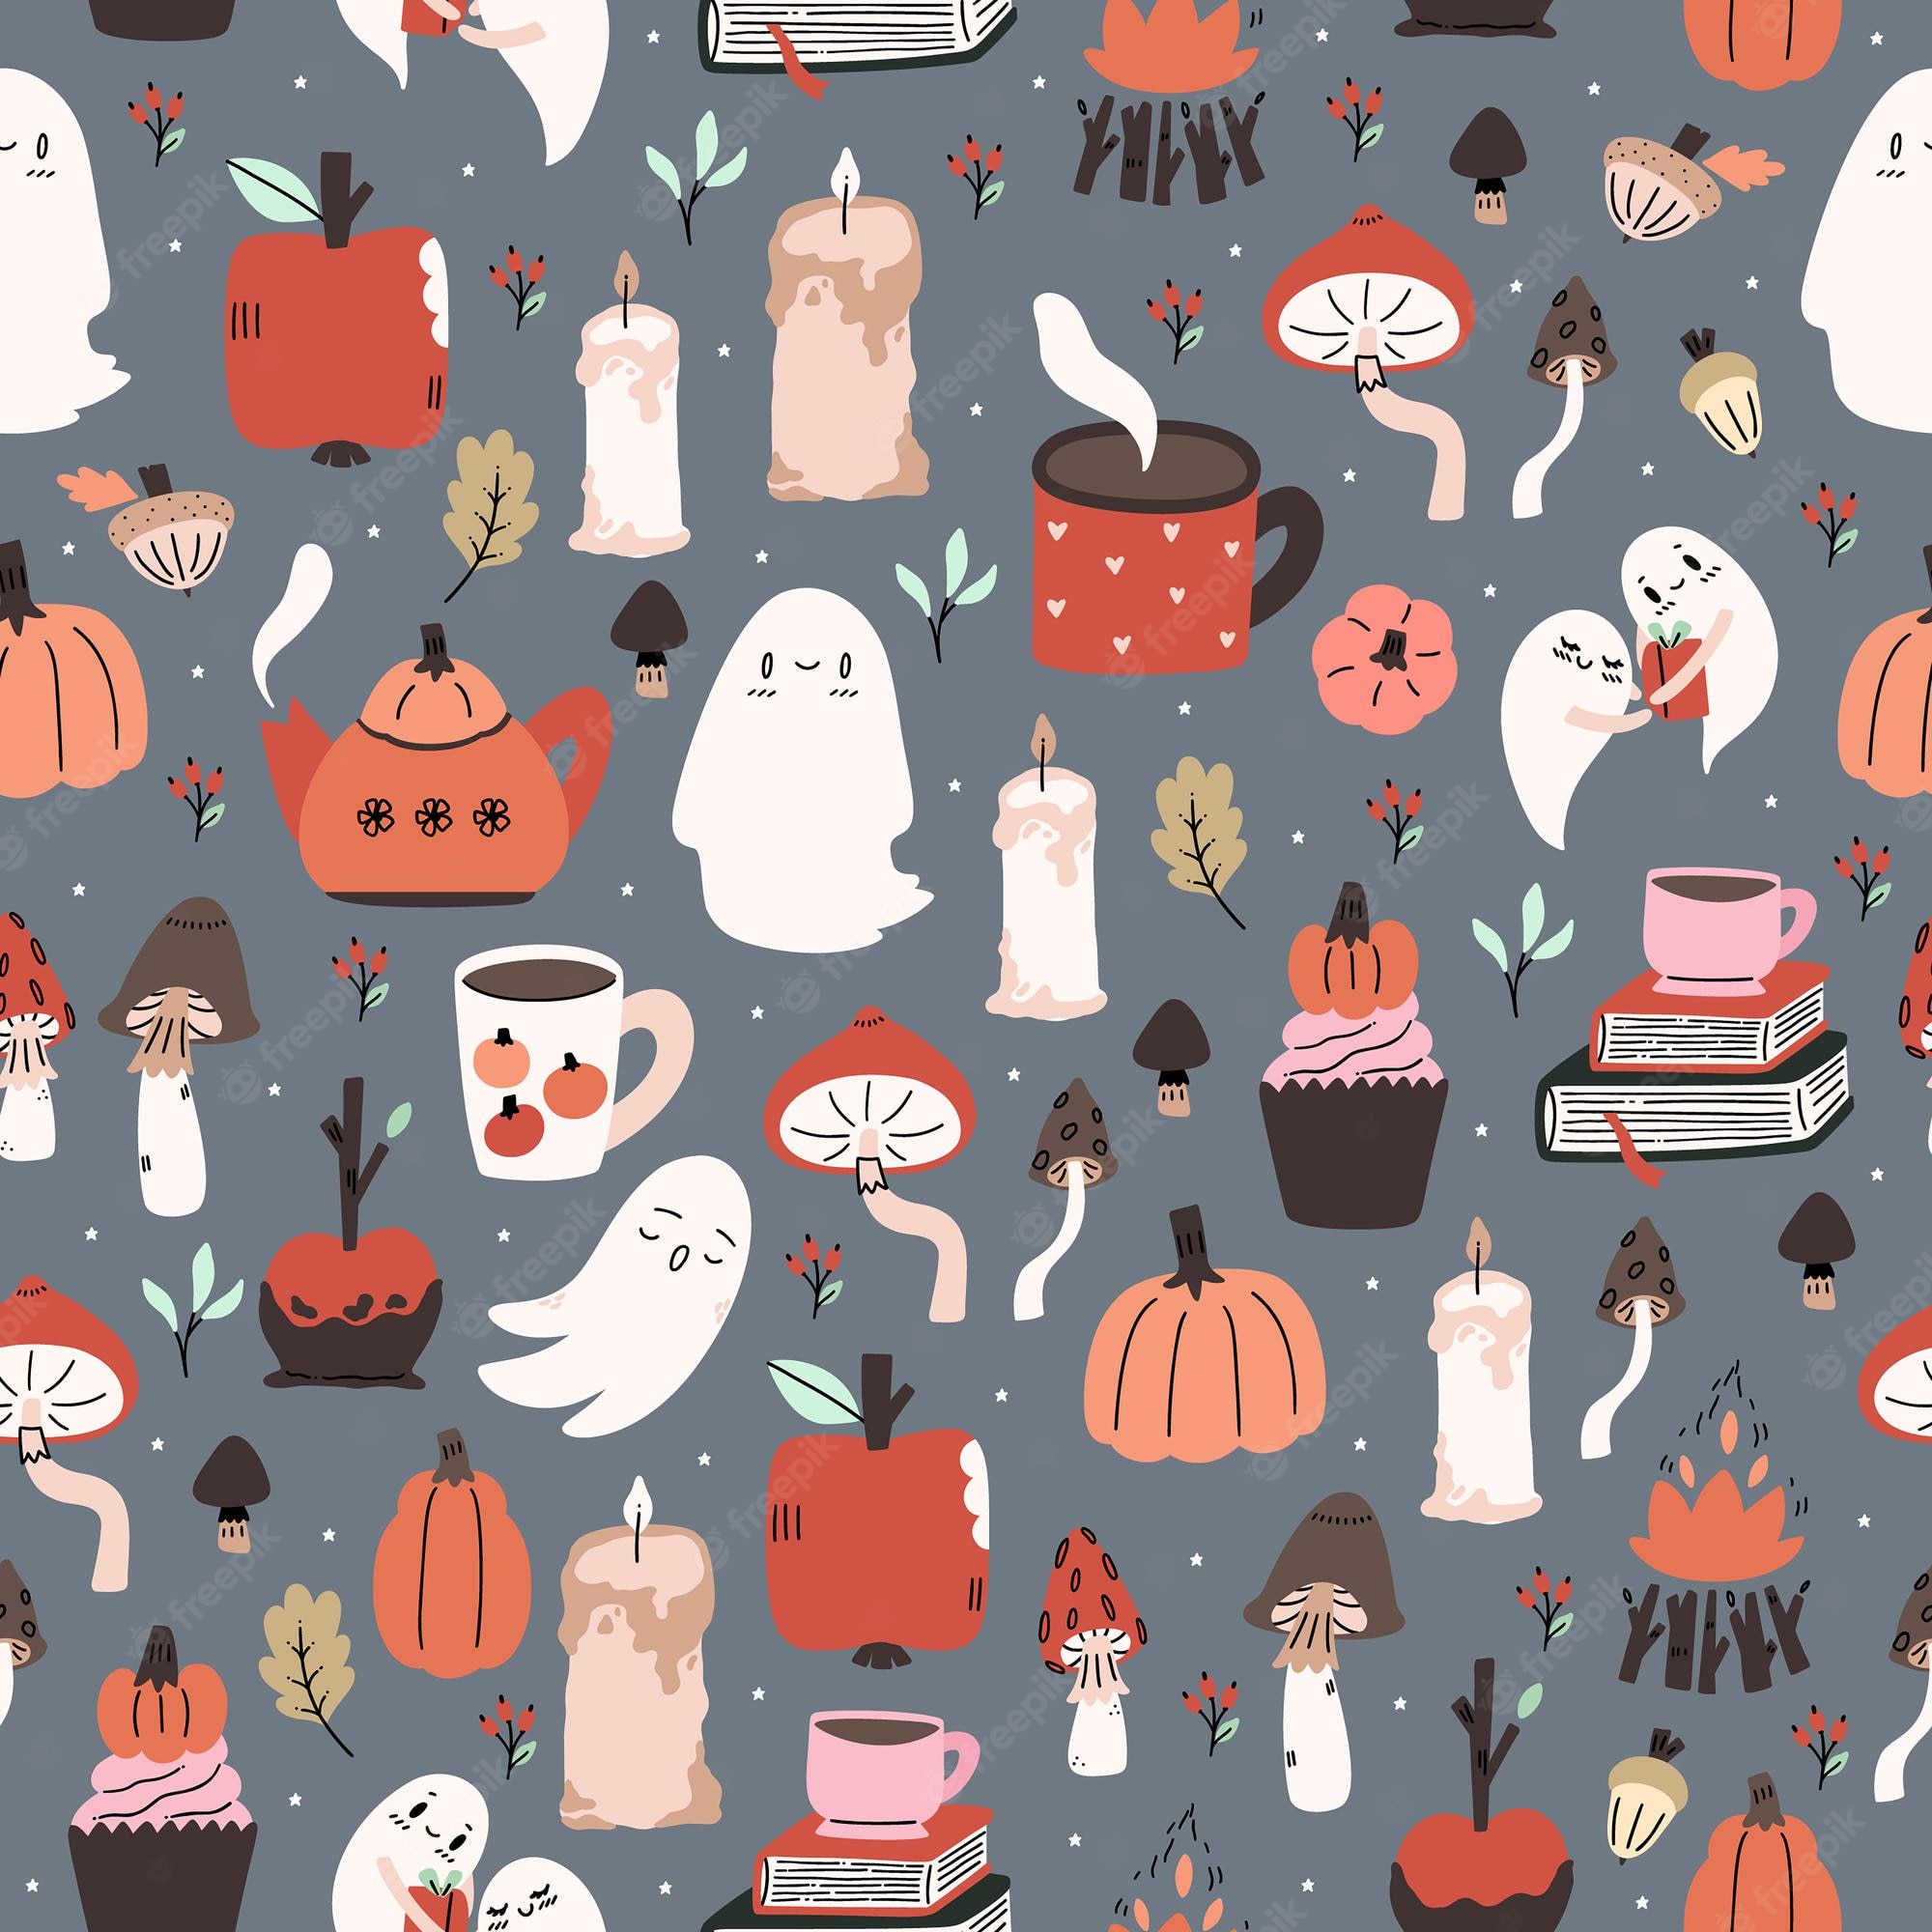 Premium Vector. Cute illustrated halloween pattern. seamleass repeated background. wallpaper, fabric, scrapbook paper design